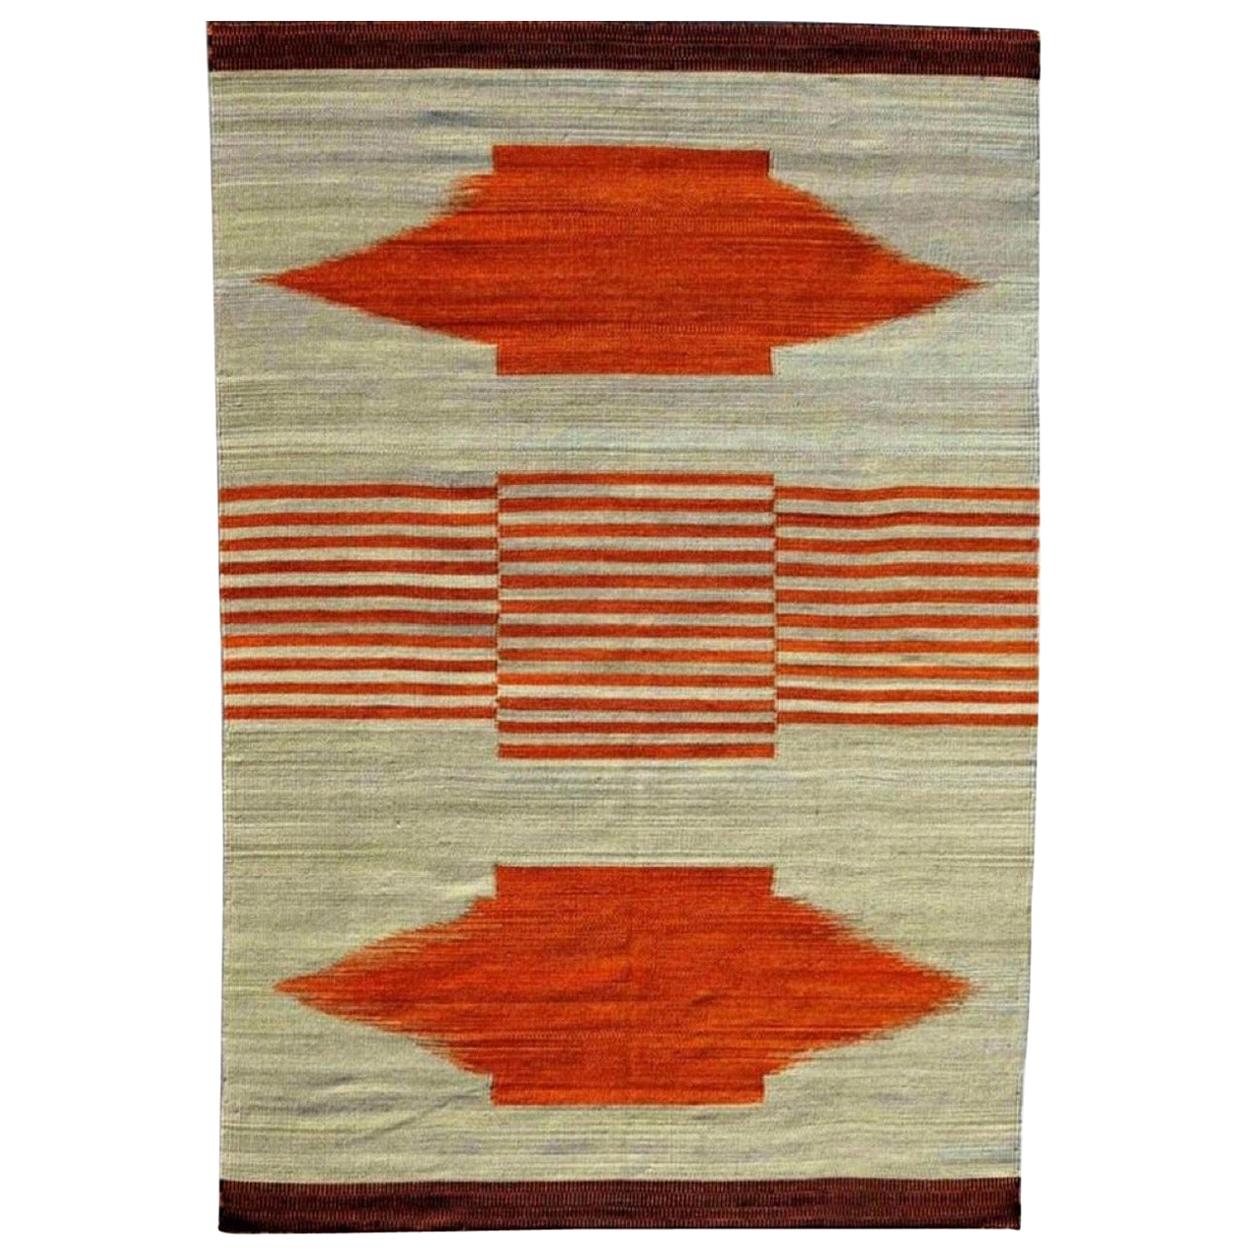 Beautiful New Tribal Design Handwoven Kilim Rug